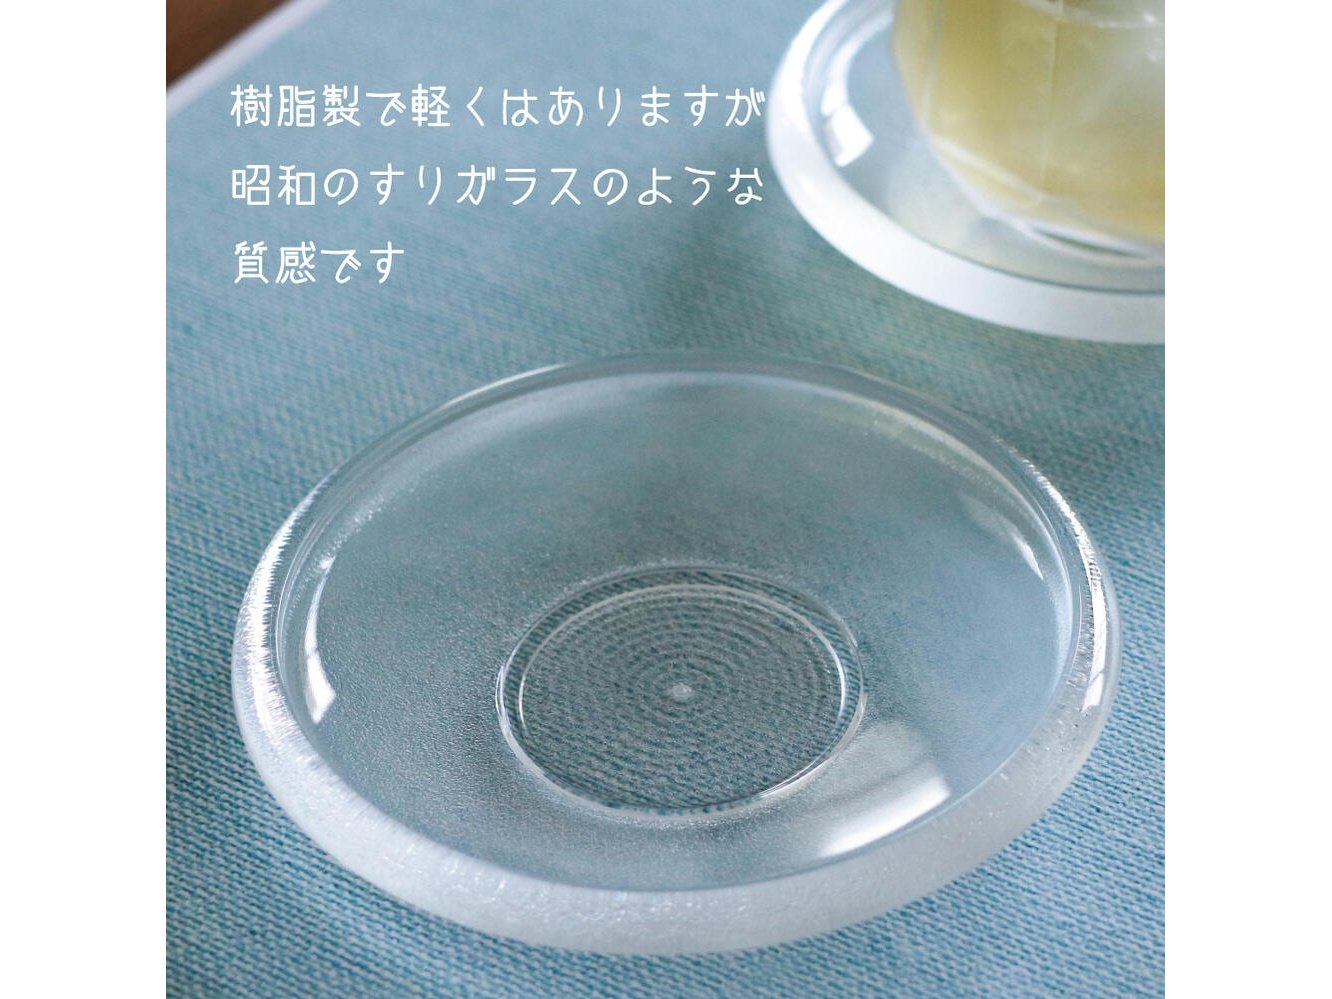 Tanaka Hashiten Clear Teacup Coaster